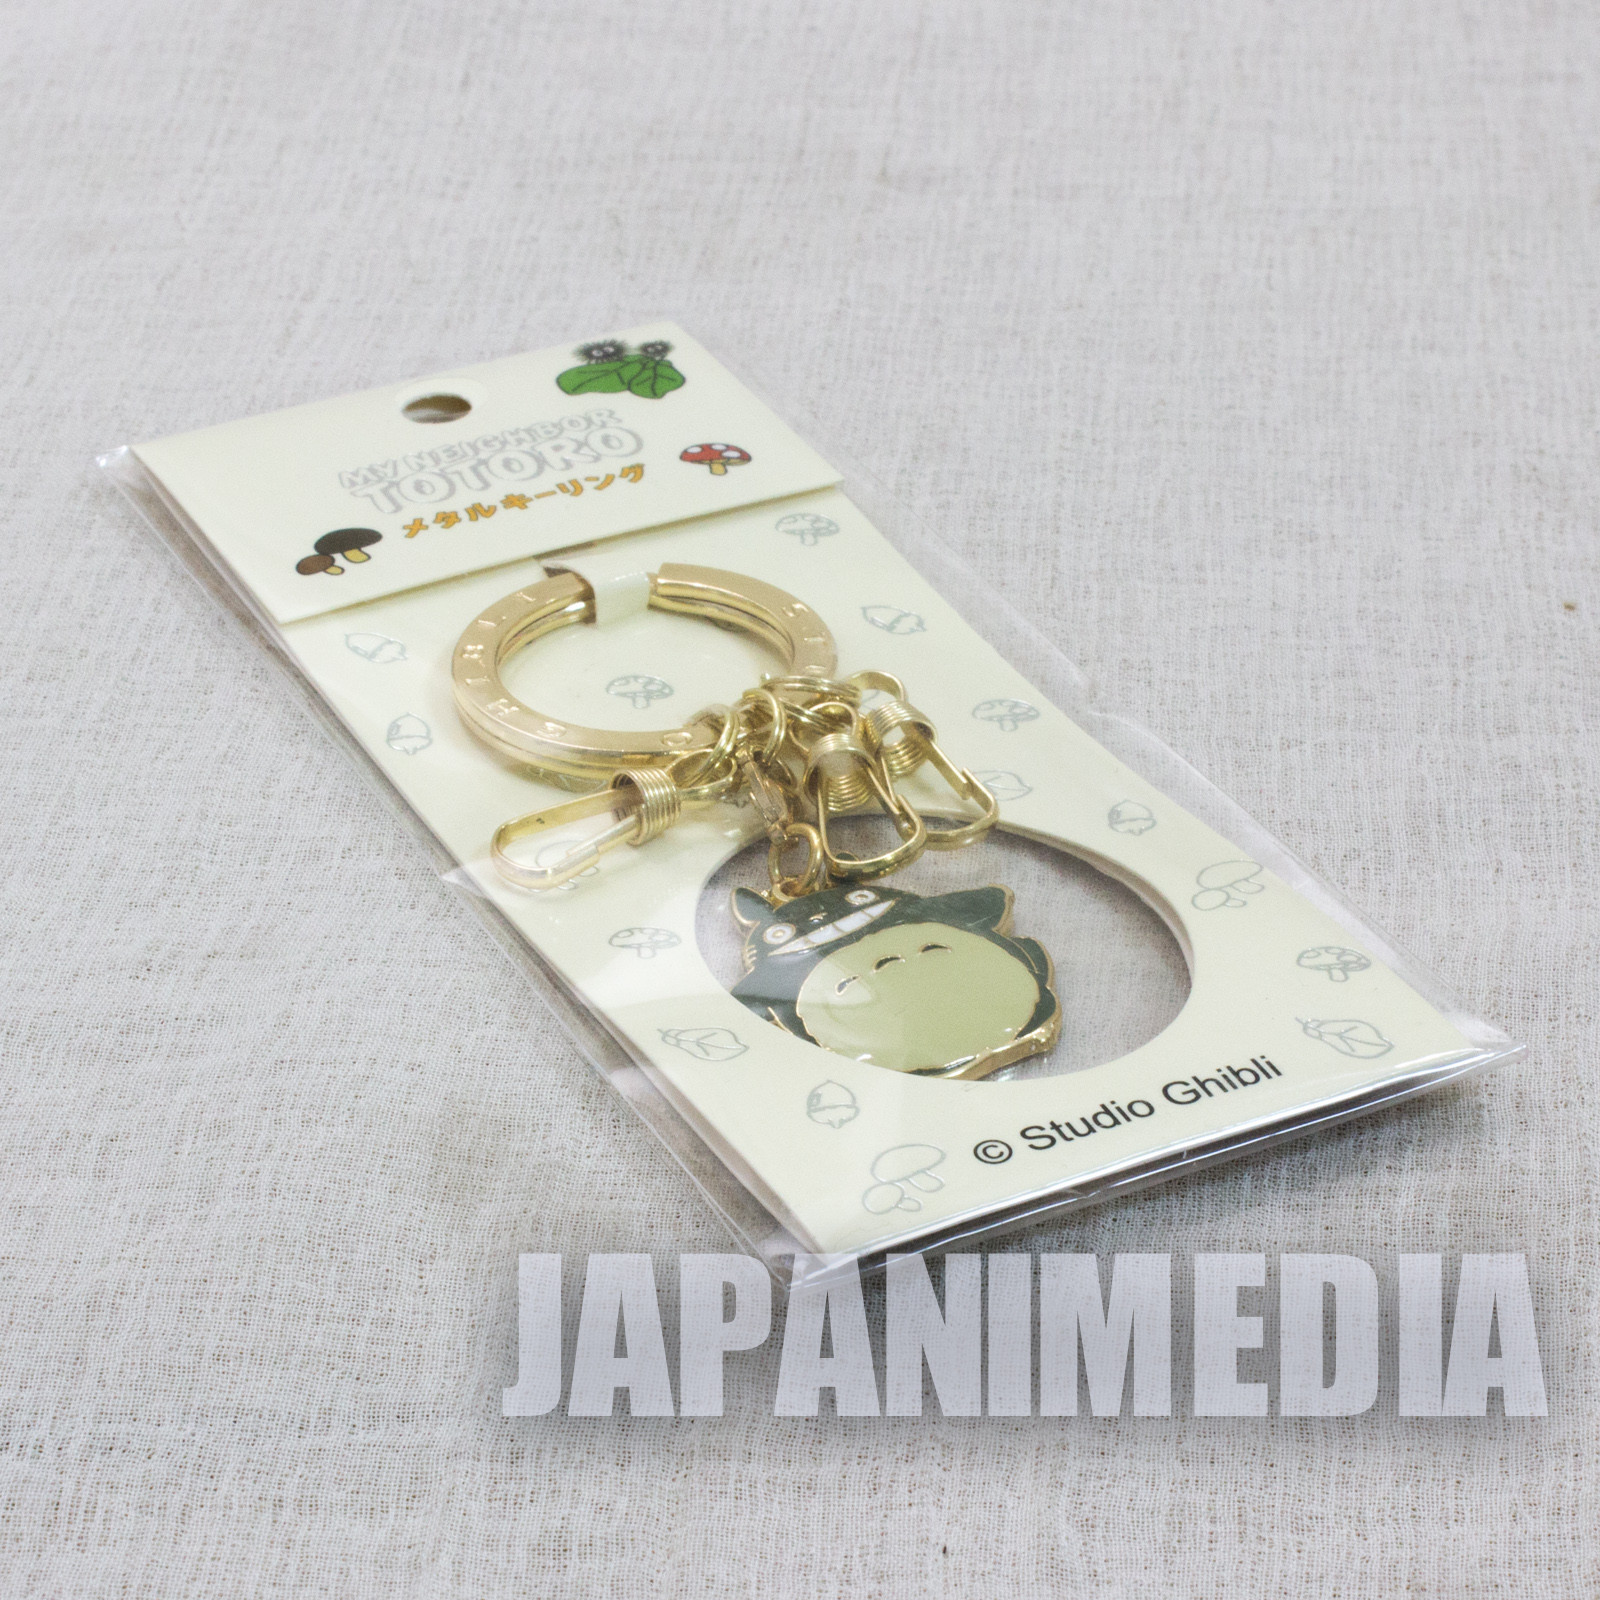 My Neighbor Totoro Mascot Charm Key Ring #2 Ghibli Hayao Miyazaki JAPAN